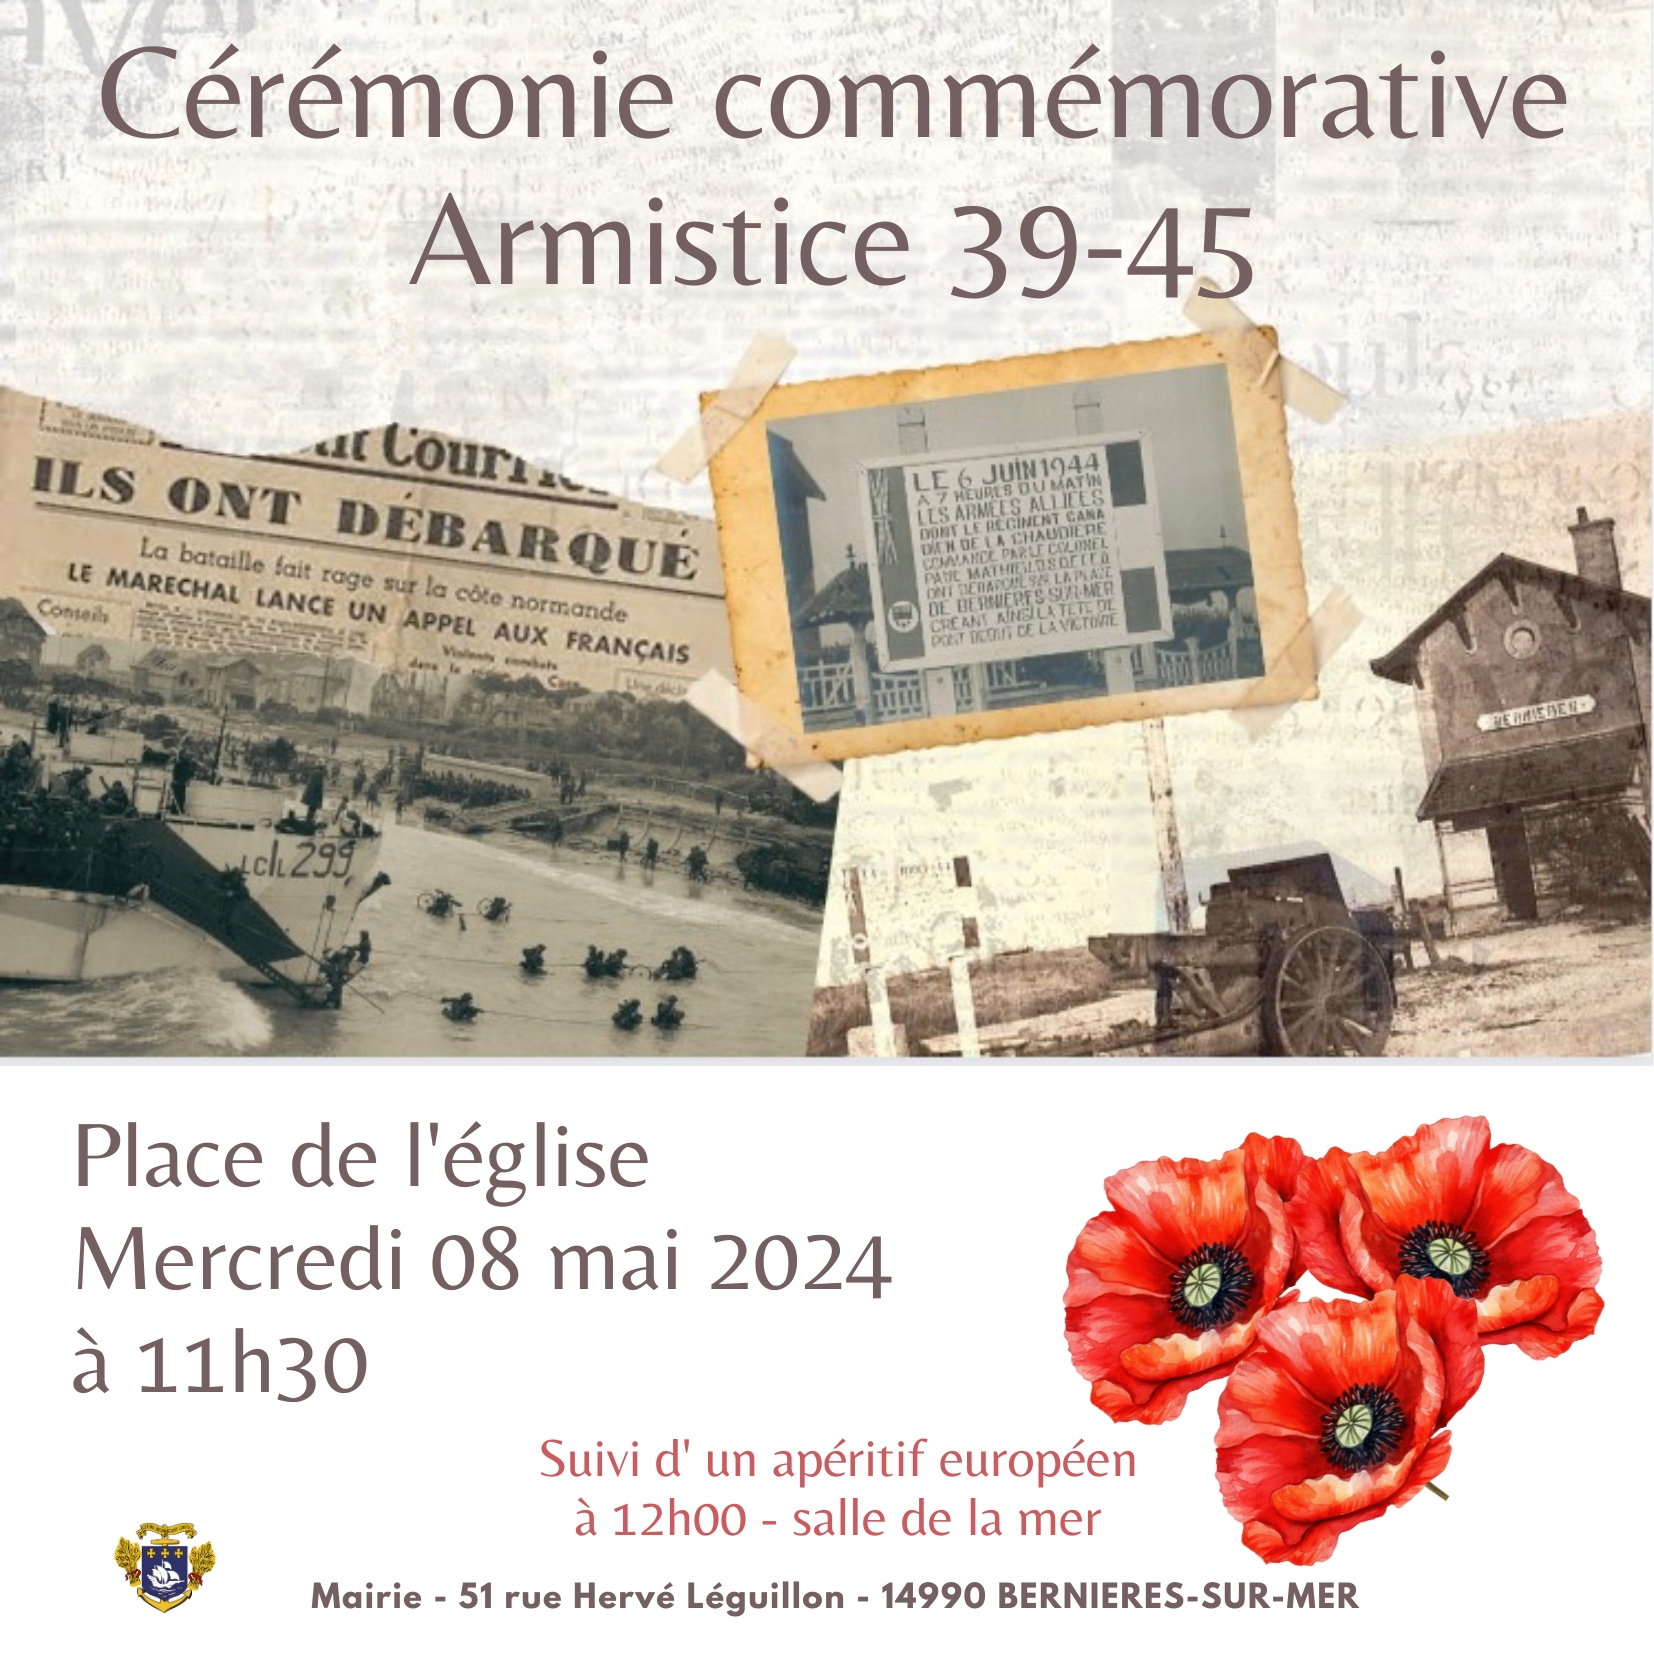 Cérémonie commémorative Armistice 39-45